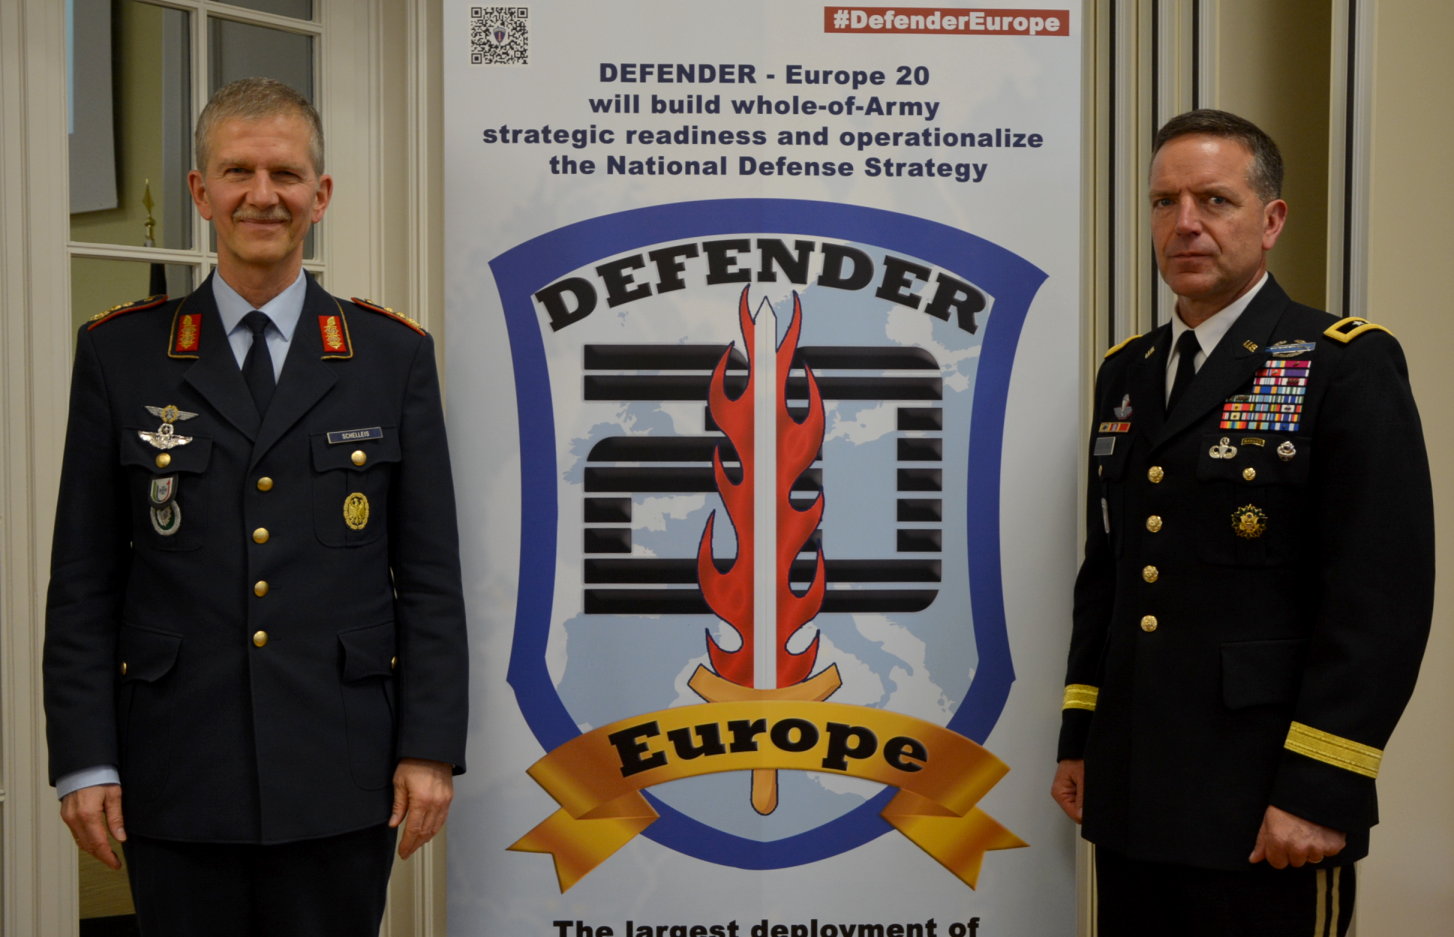 #DefenderEurope US Defender Europe 2020 Schelleis Rohling